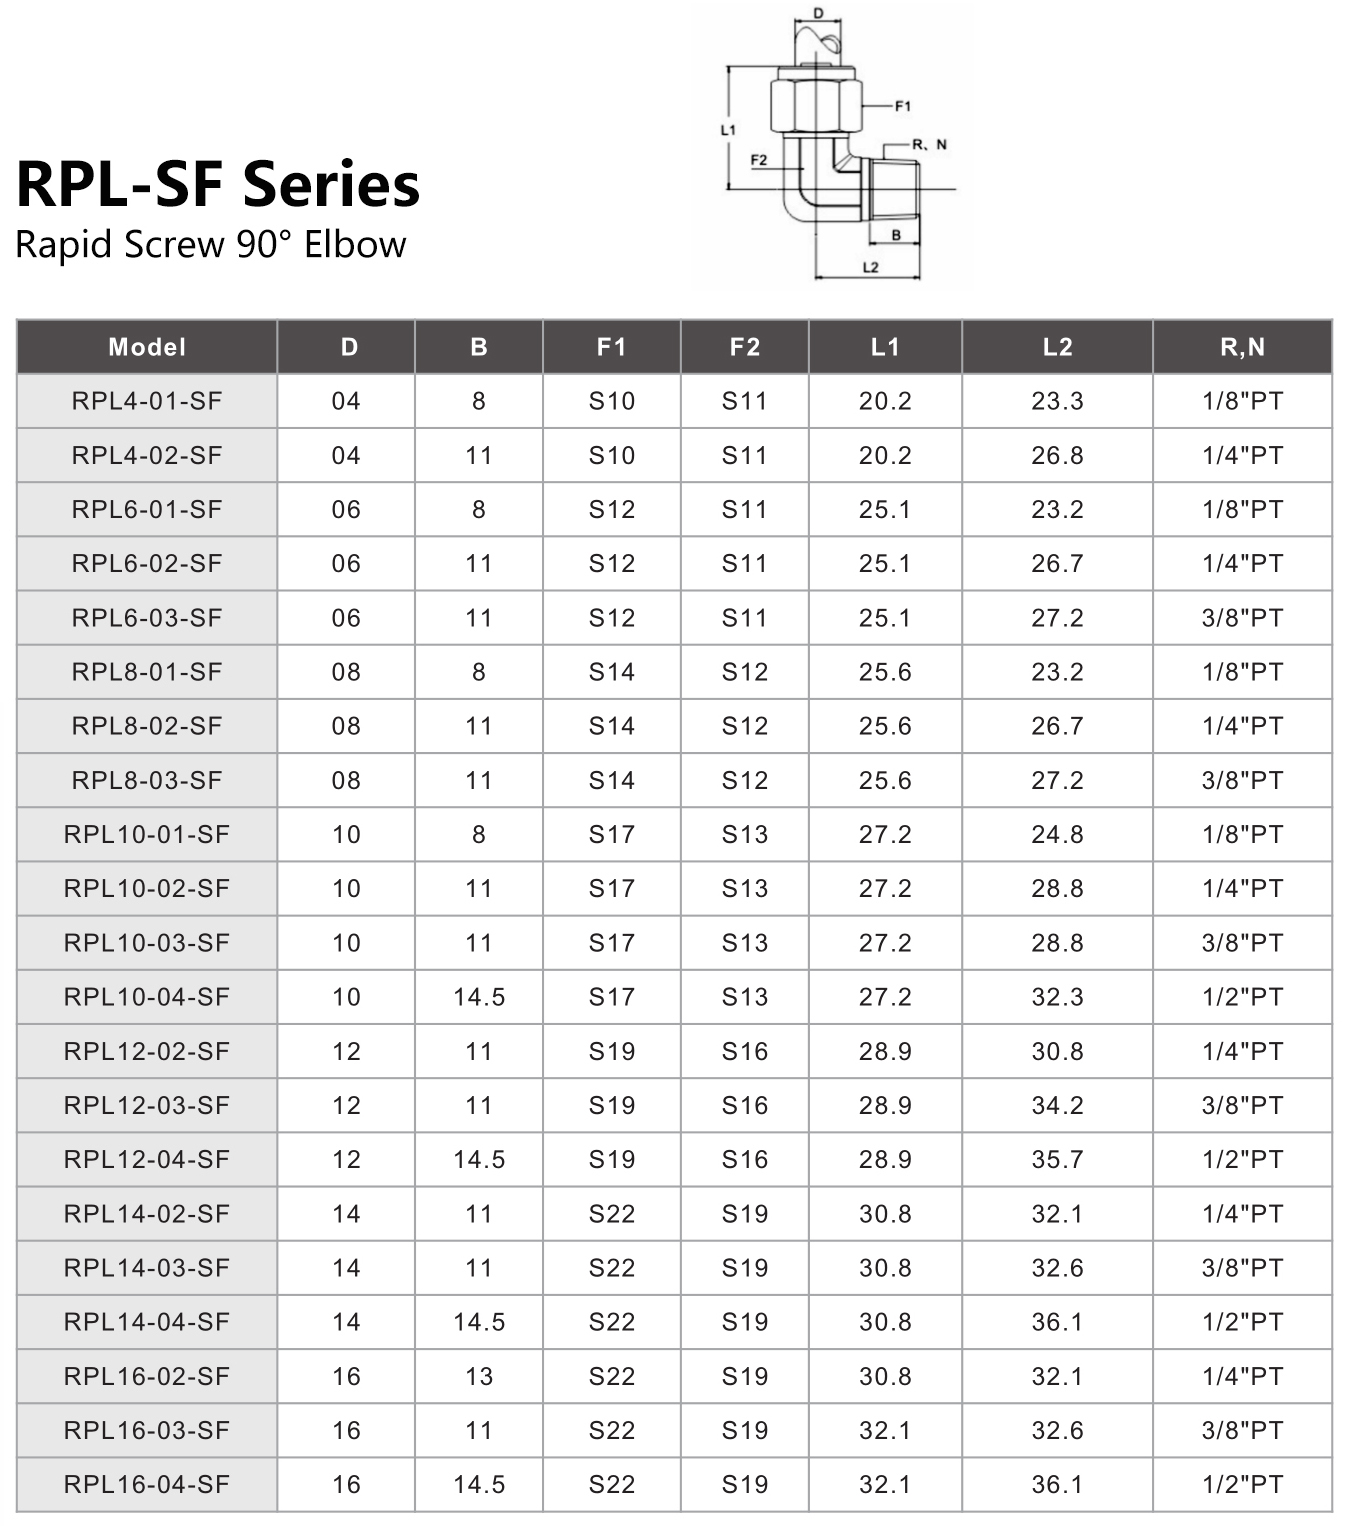 RPL-SF Series Rapid Screw 90° Elbow